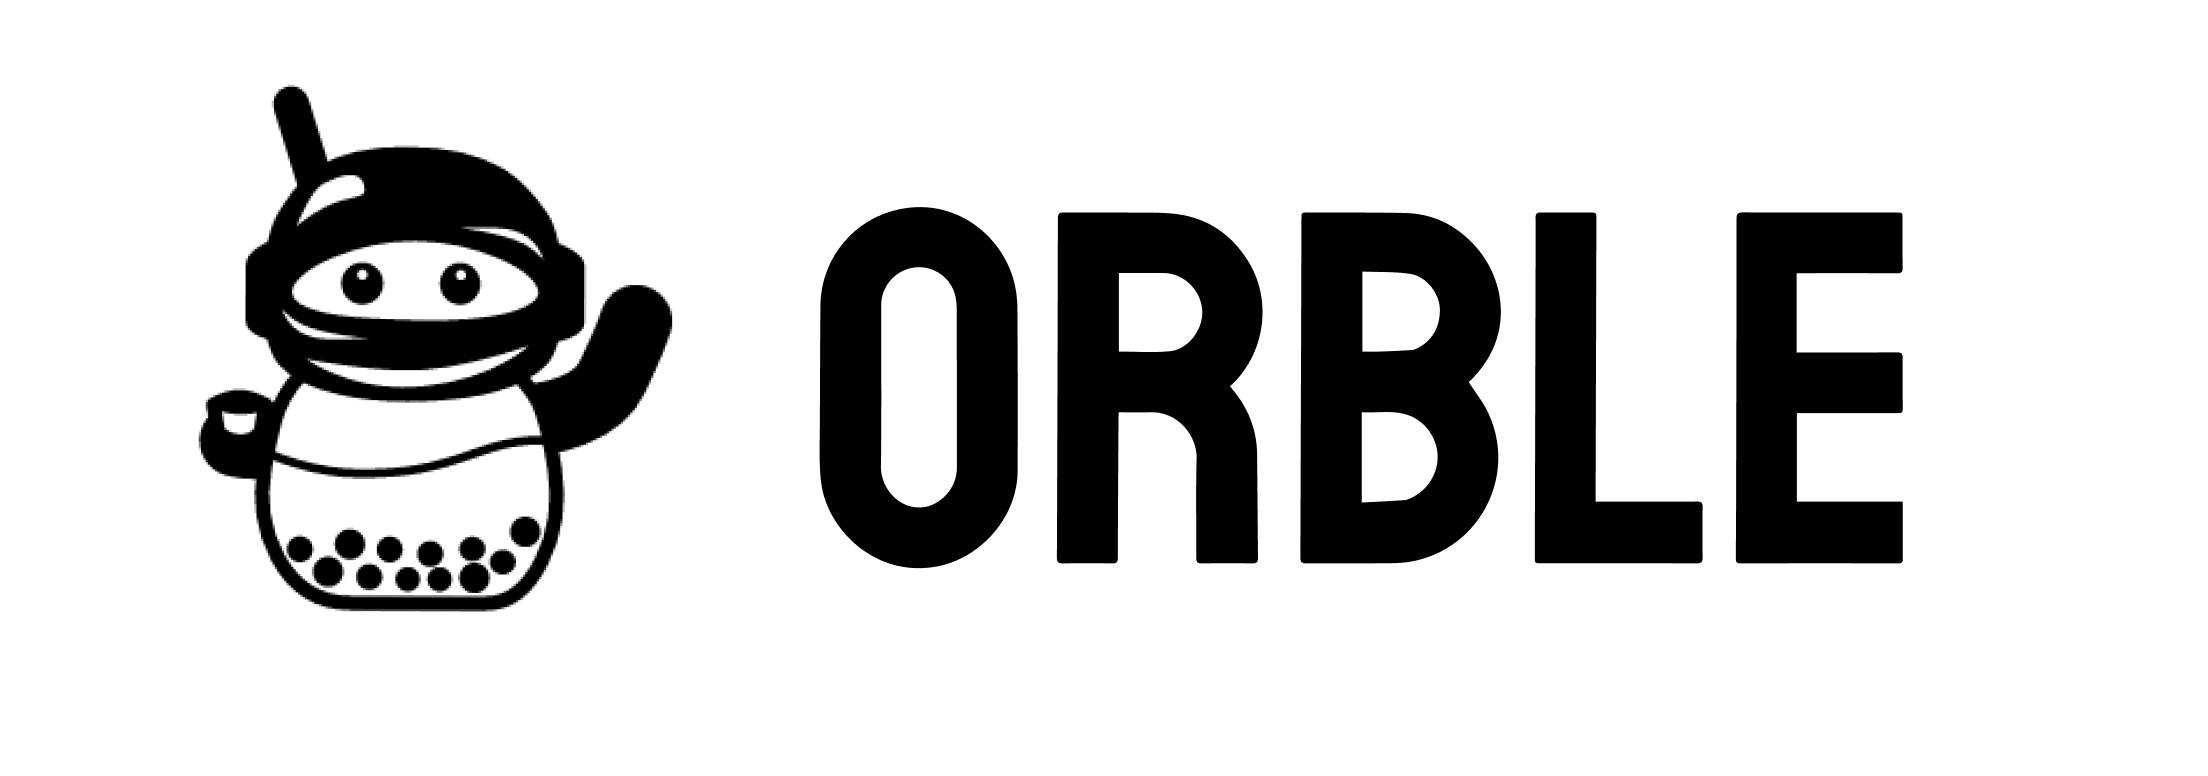 Orble Logo